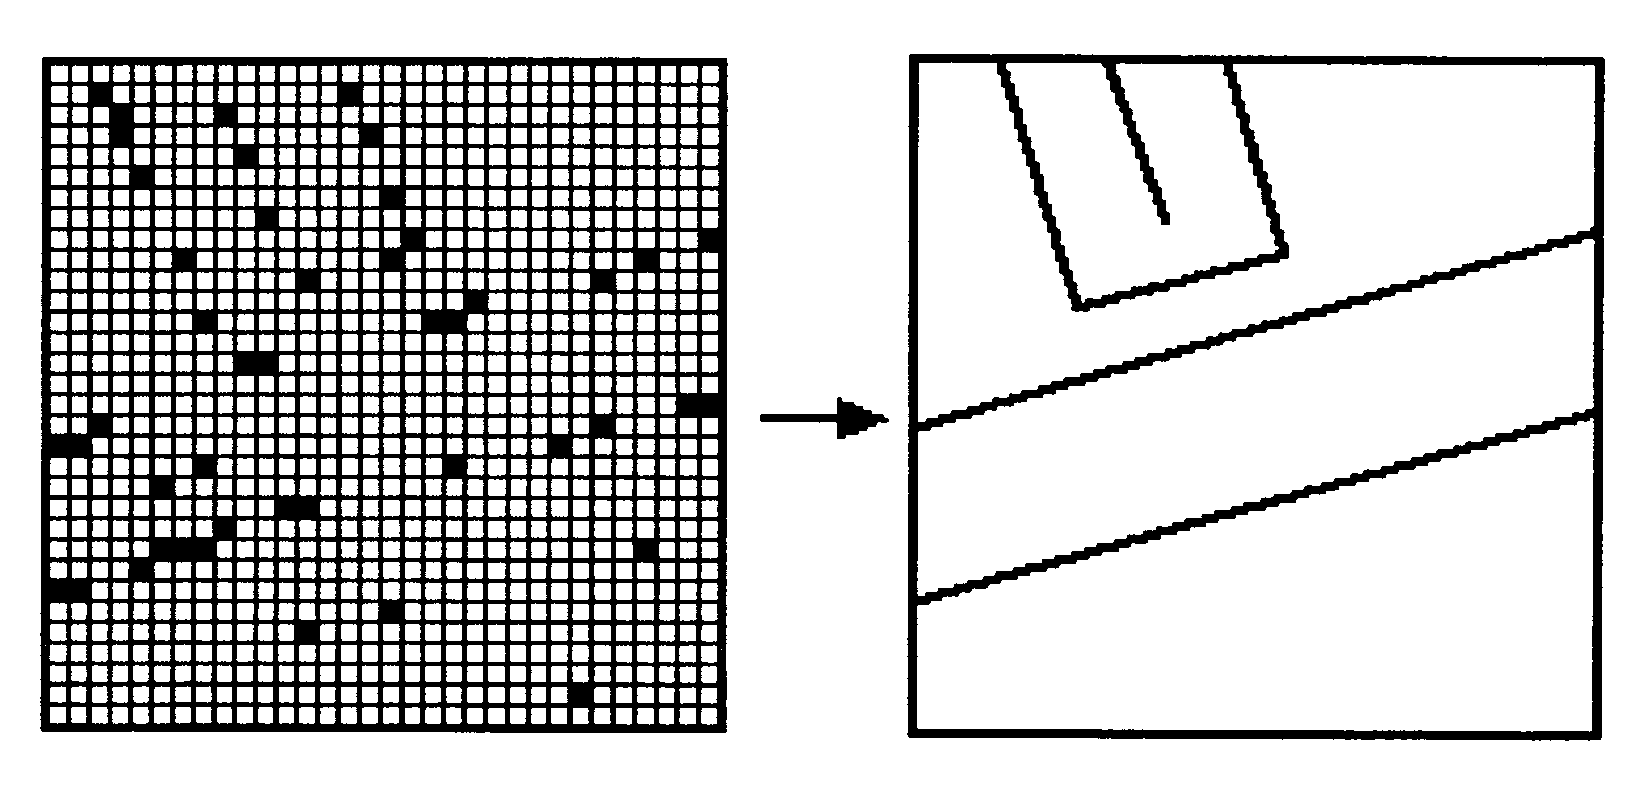 Method of image analysis using sparse hough transform